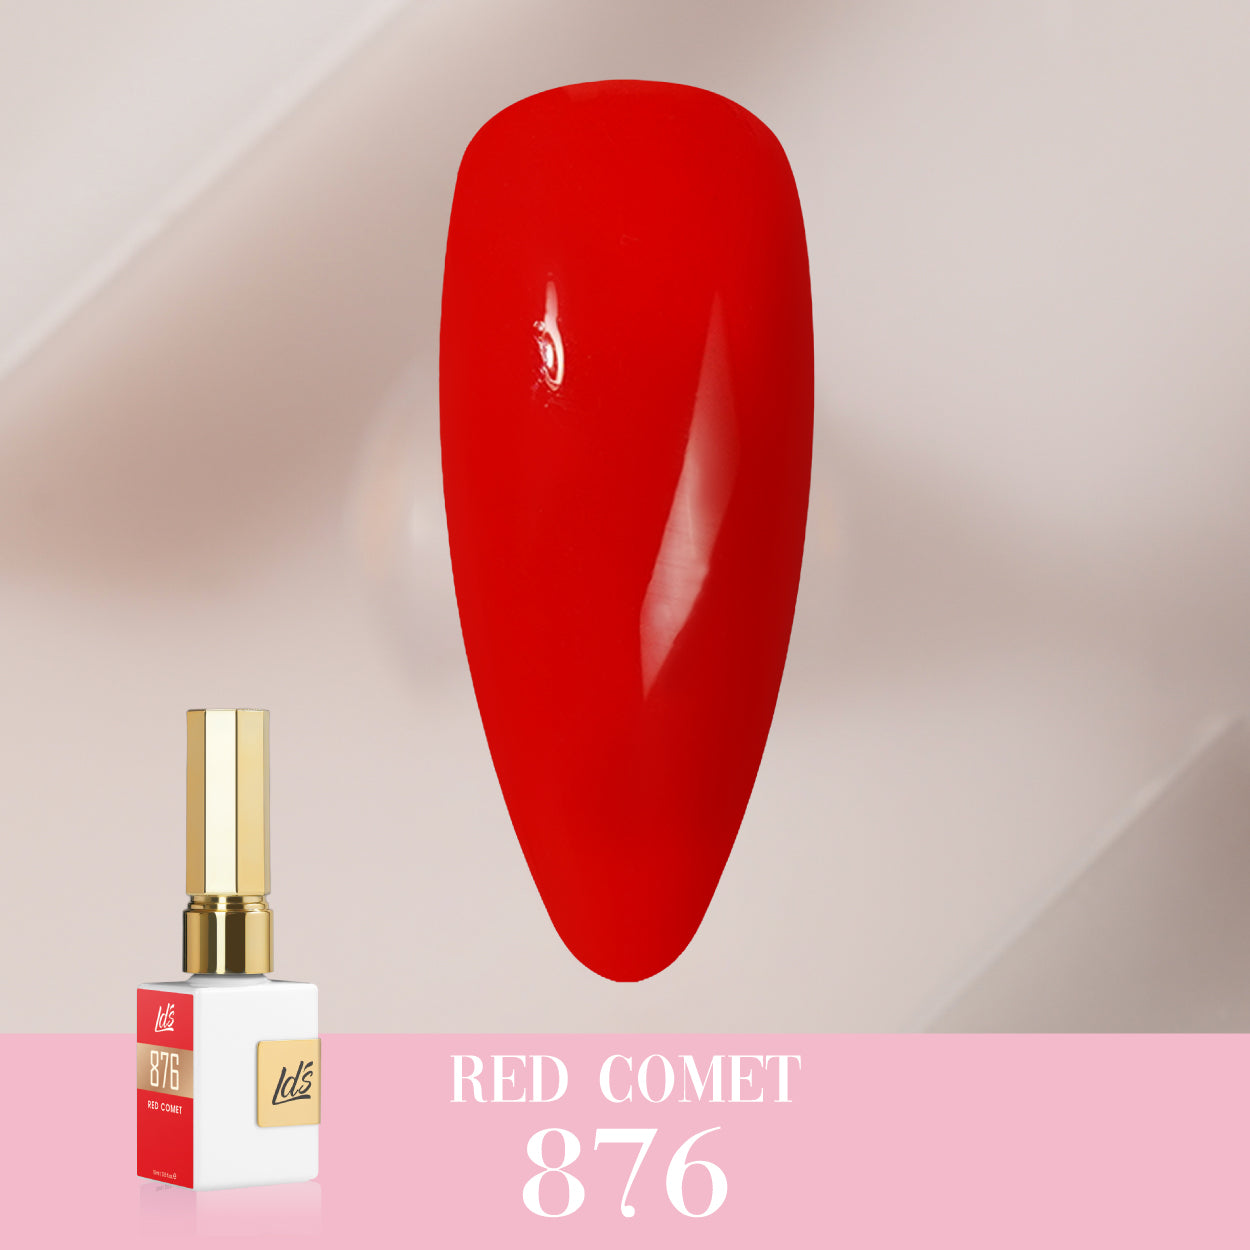 LDS Color Craze Collection - 876 Red Comet - Gel Polish 0.5oz